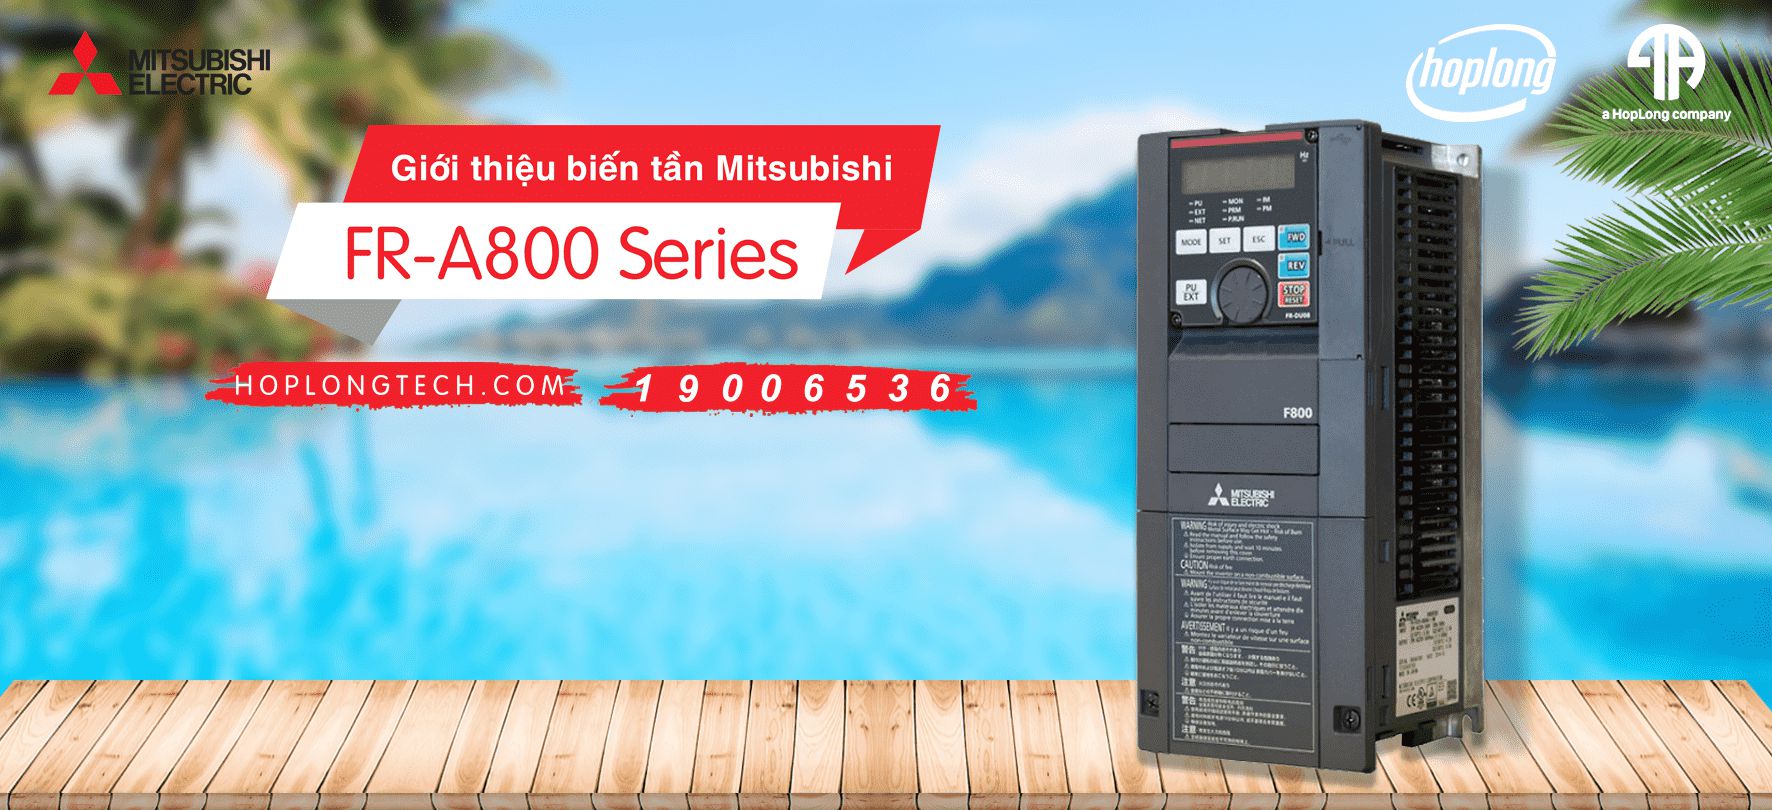 [MITSUBISHI] Giới thiệu biến tần Mitsubishi FR-A800 Series